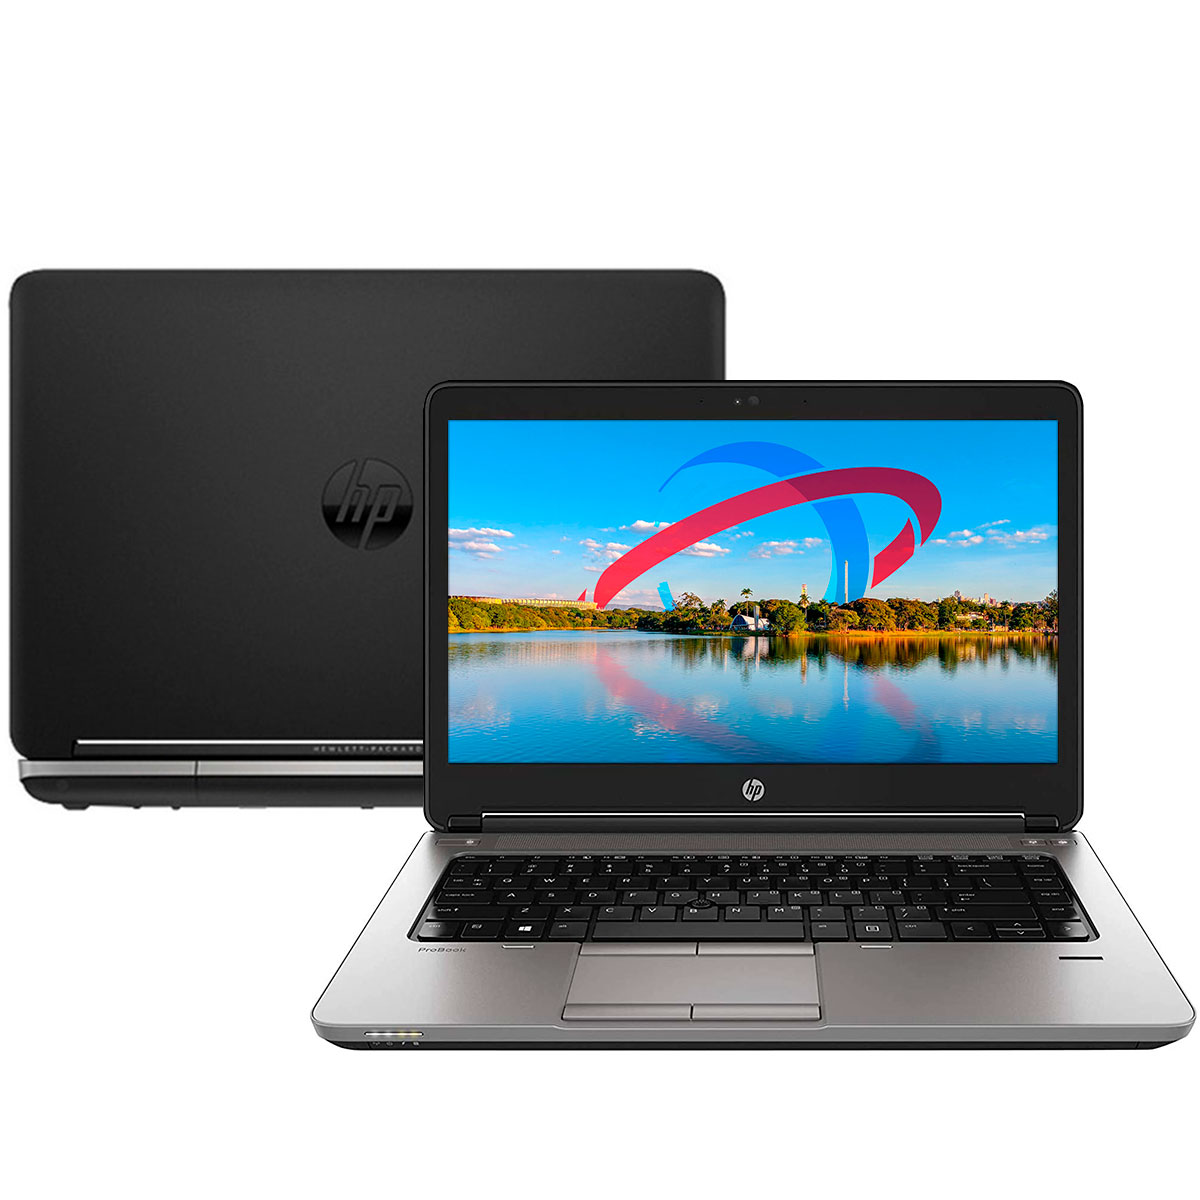 Notebook HP ProBook 645 G1 - AMD A10, RAM 4GB, HD 500GB, Tela 14